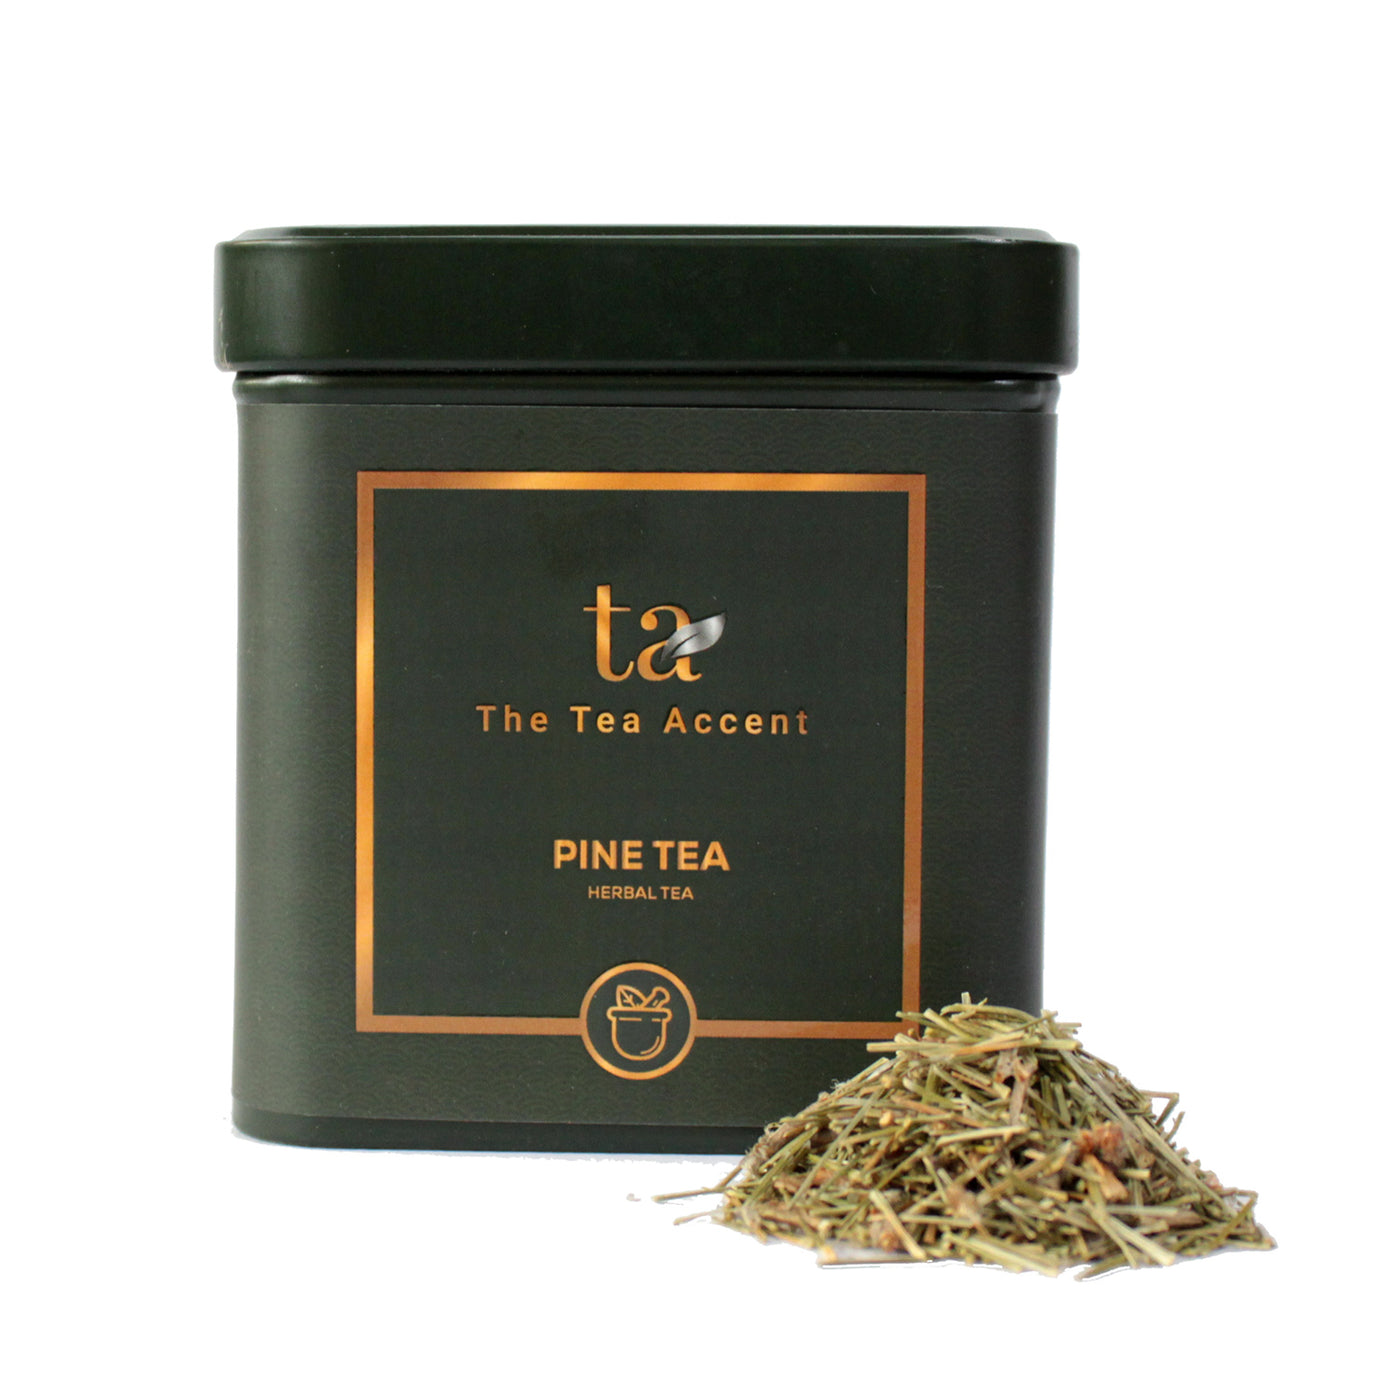 Pine Tea